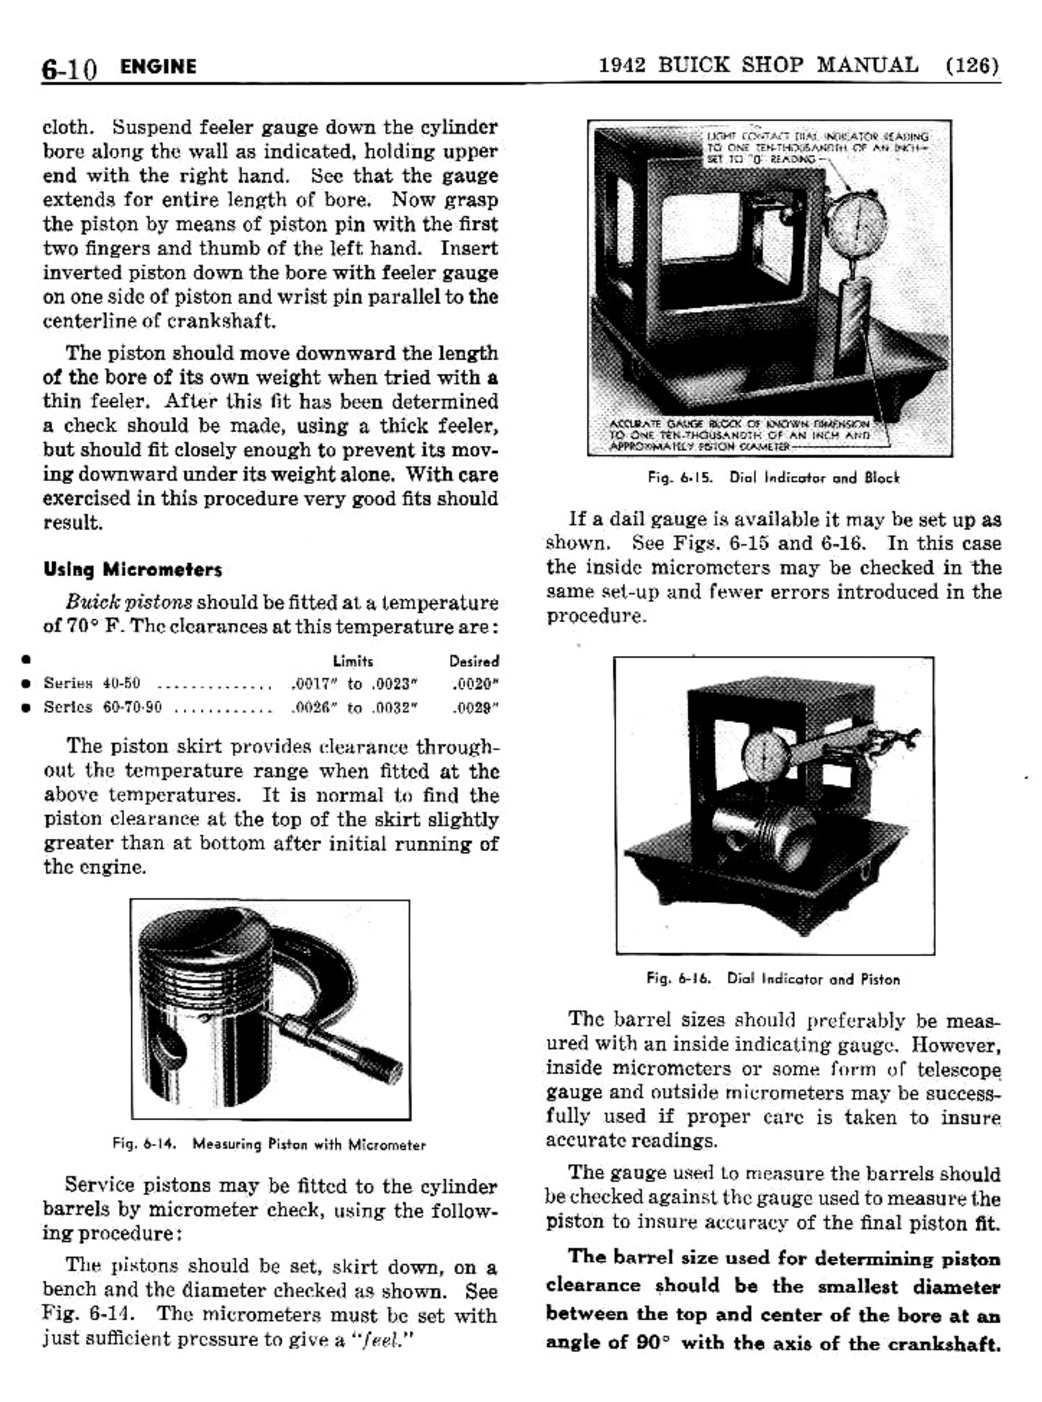 n_07 1942 Buick Shop Manual - Engine-010-010.jpg